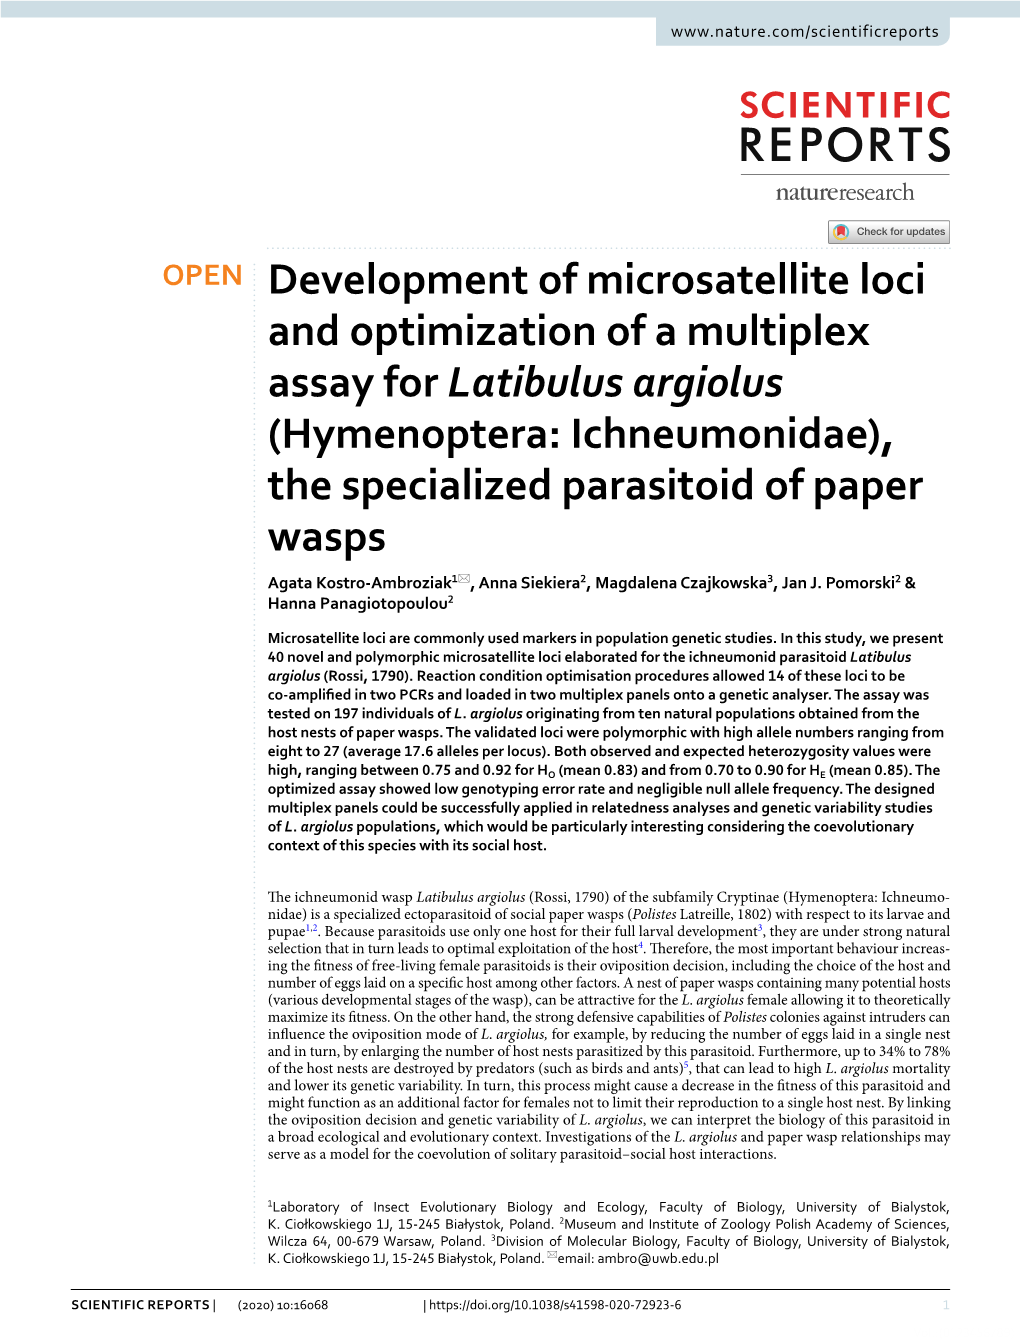 Development of Microsatellite Loci and Optimization of a Multiplex Assay